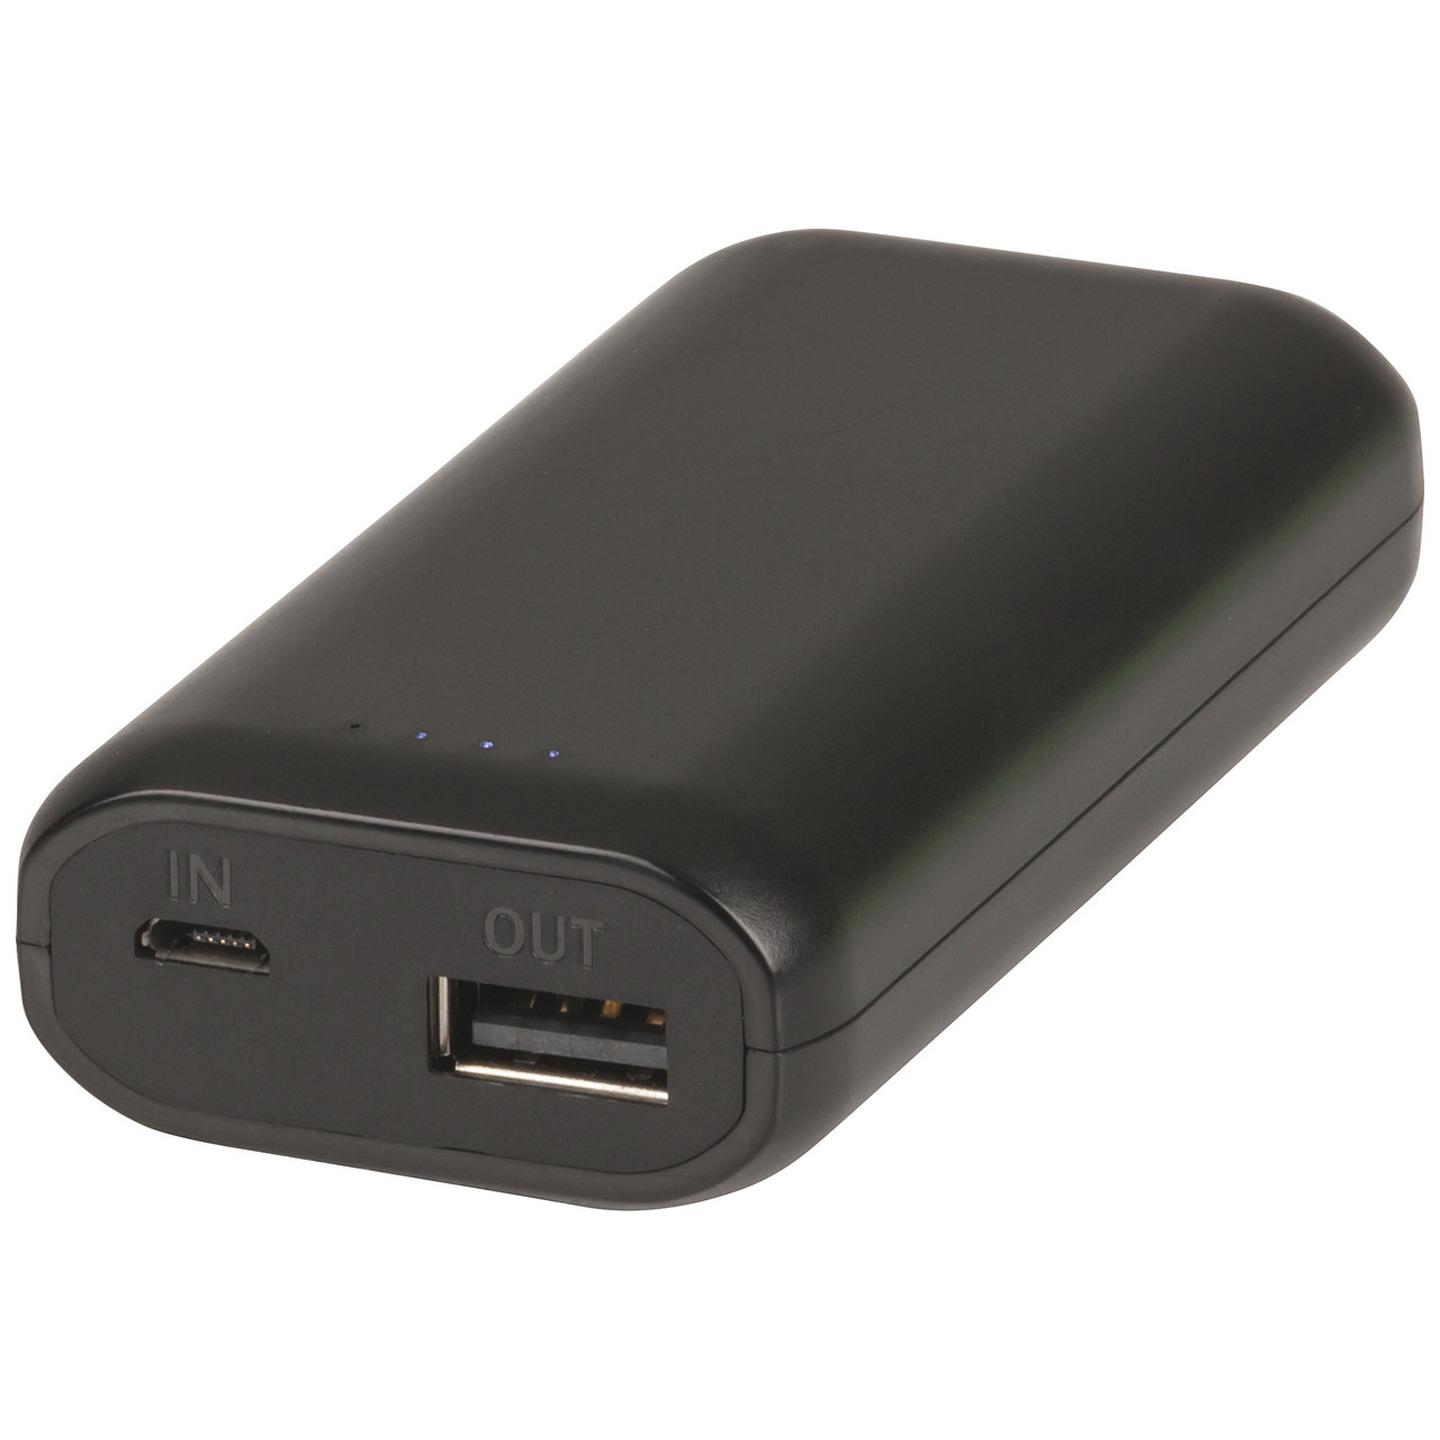 5200mAh USB Portable Power Bank